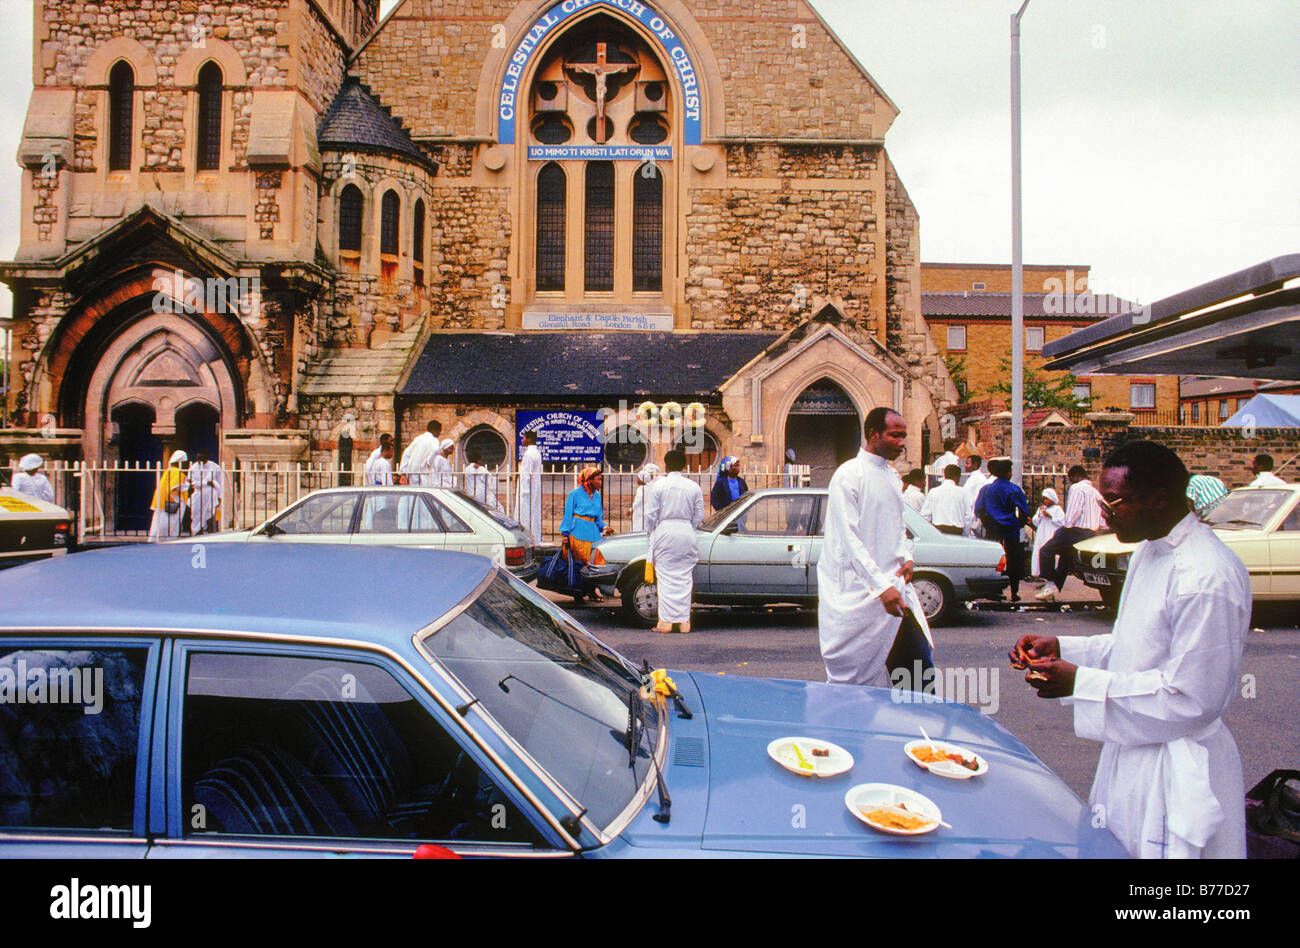 The Celestial Church Of Christ, Elephant & Castle, London UK. A church member snacks on food, using a car as a makeshift table. Stock Photo